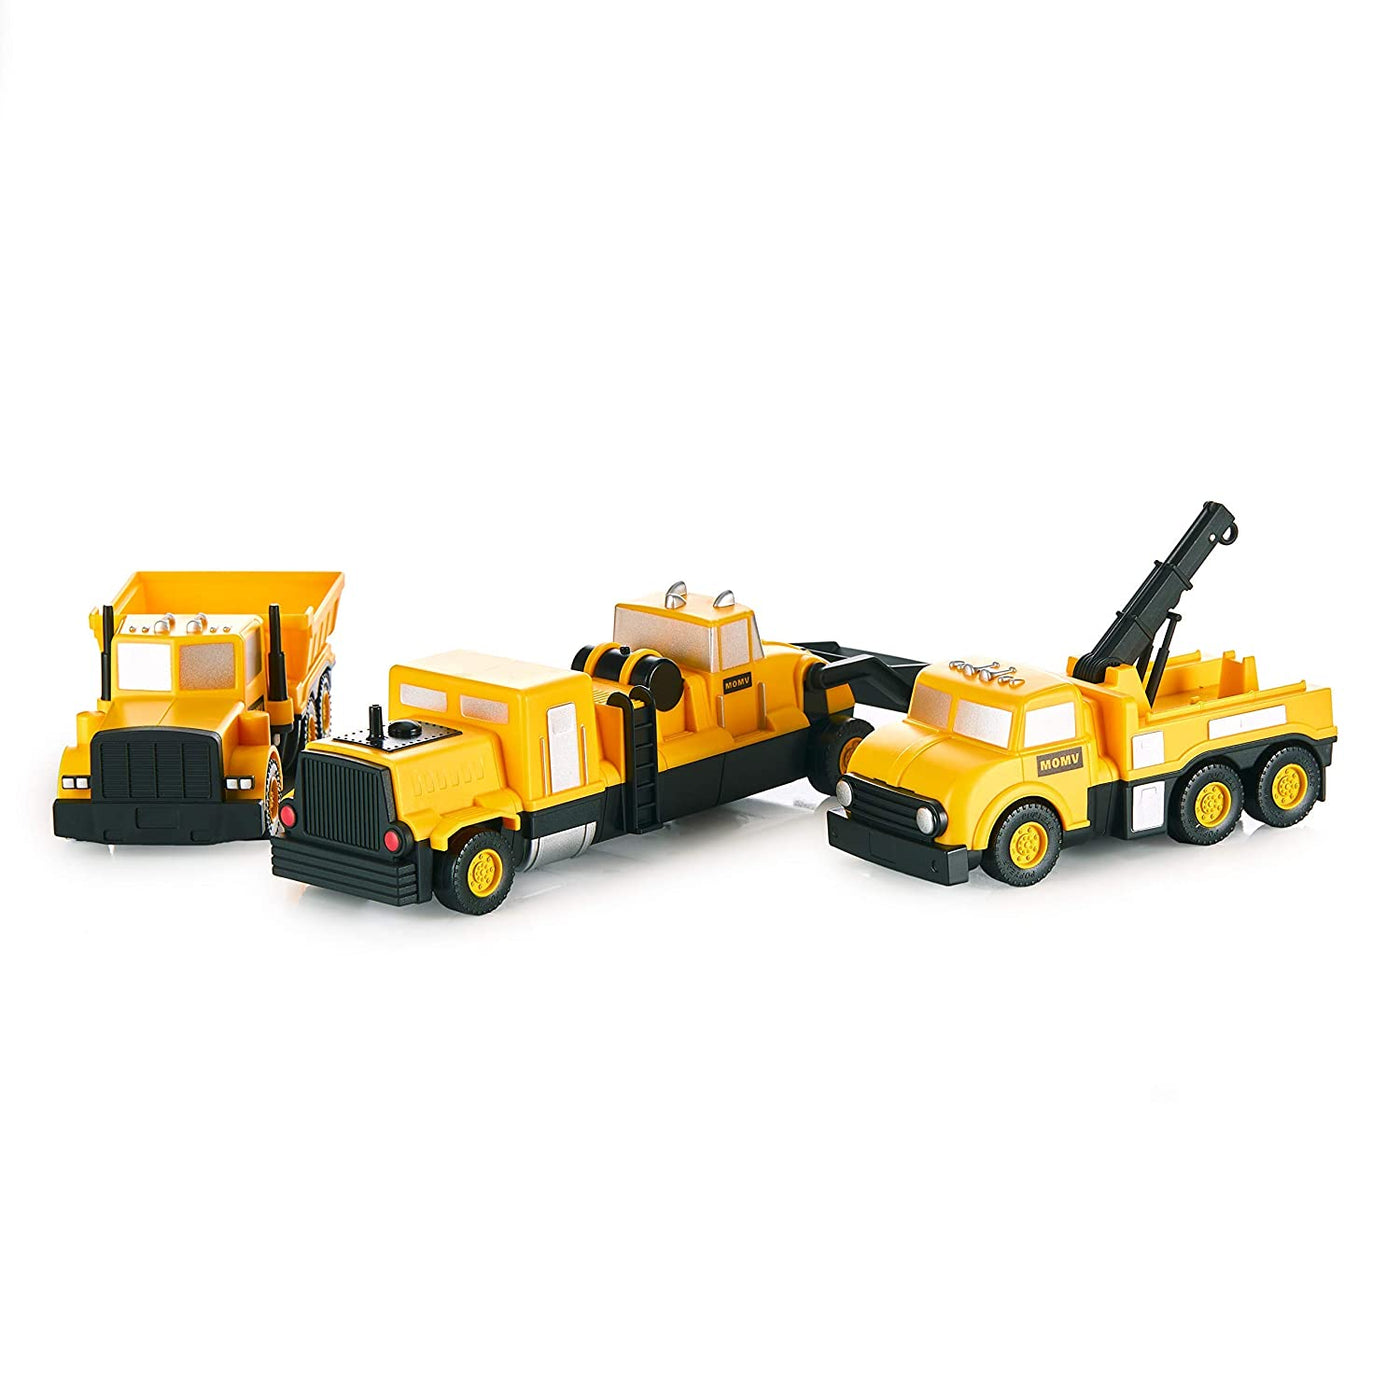 Mix or Match Vehicles Construction Set